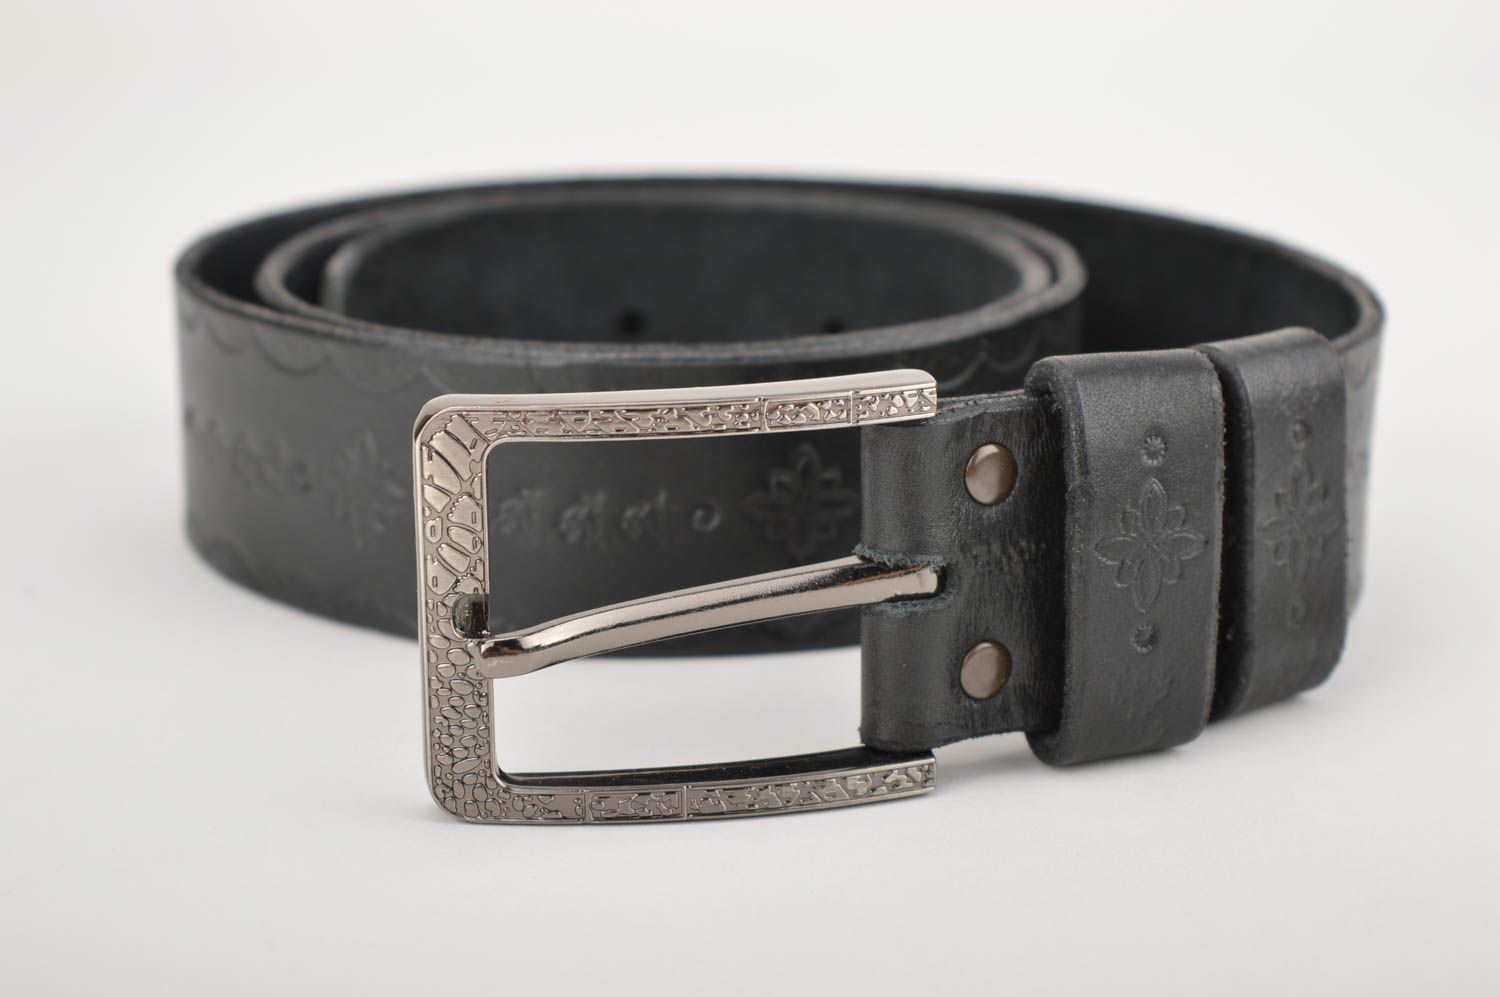 Stylish handmade leather belt stylish belts for men gentlemen only gift ideas photo 1